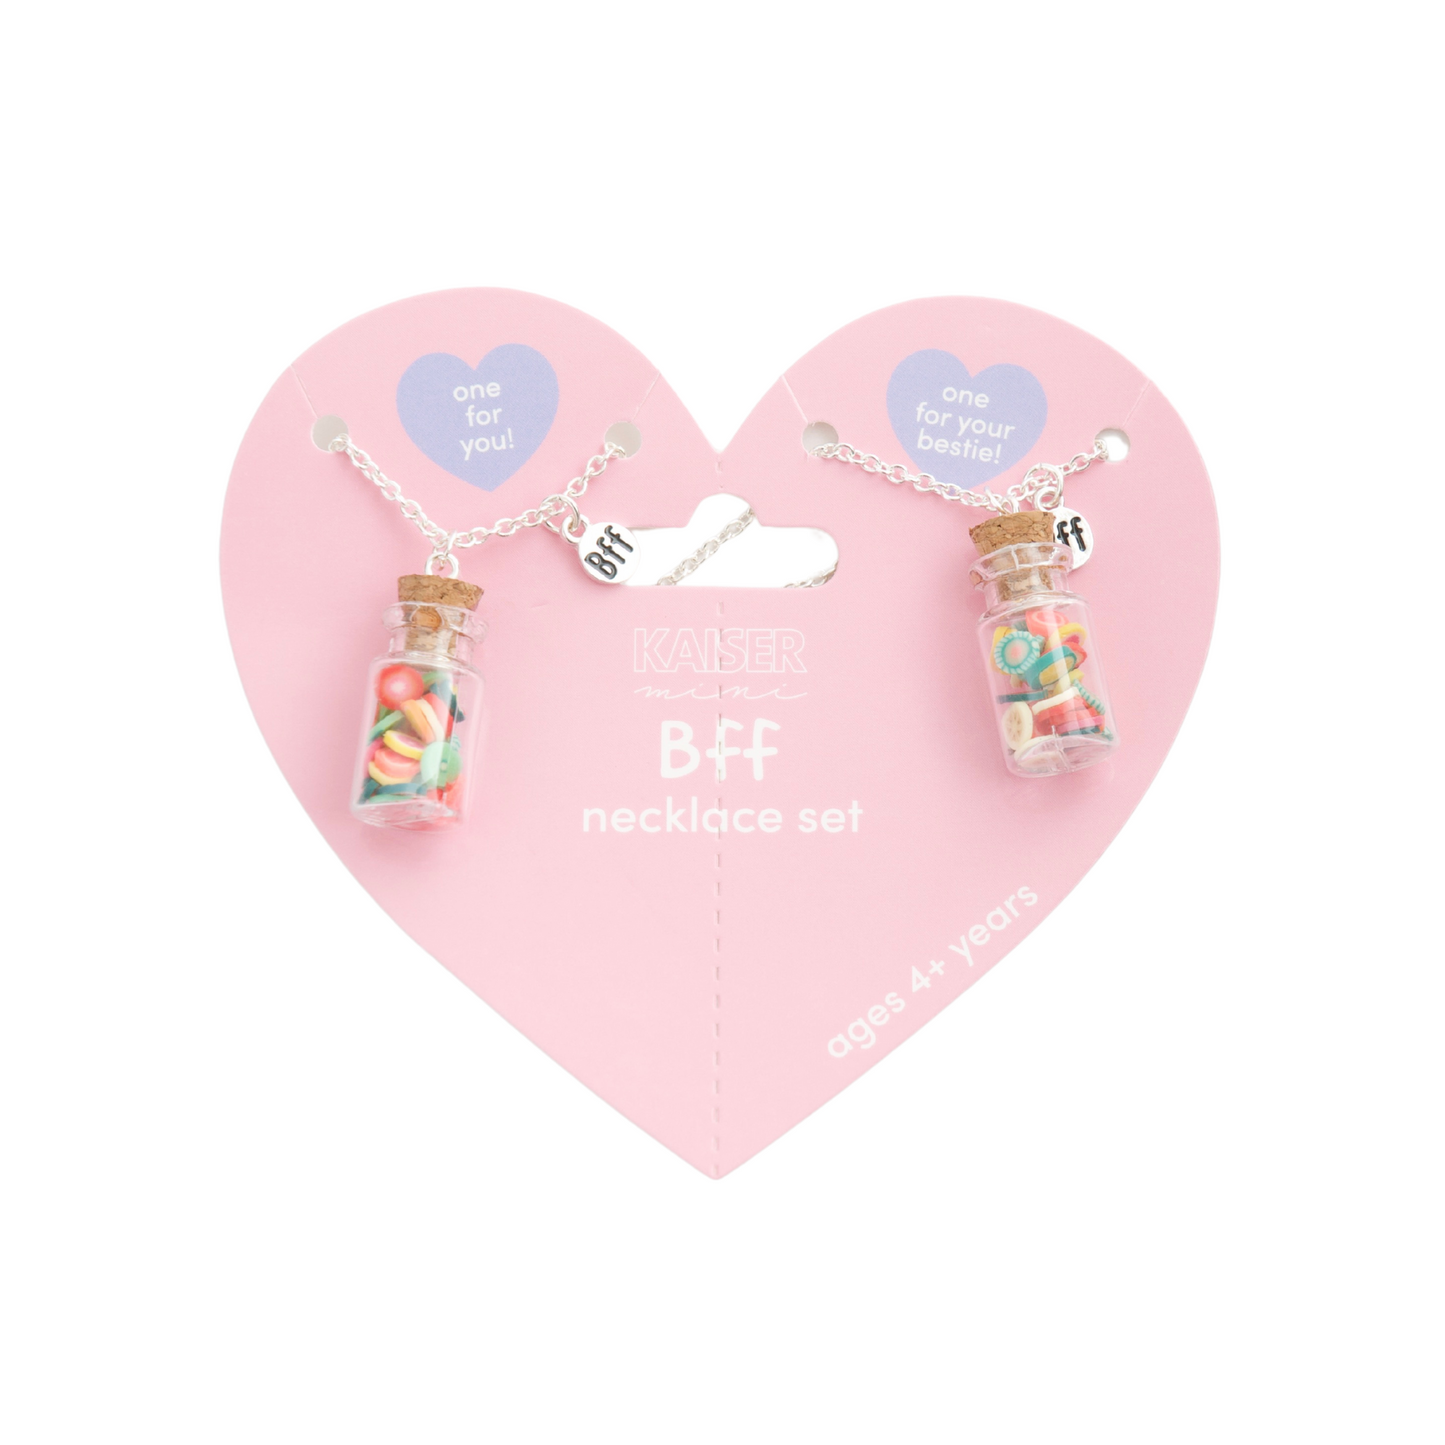 BFF Necklace - Fruit Bottle